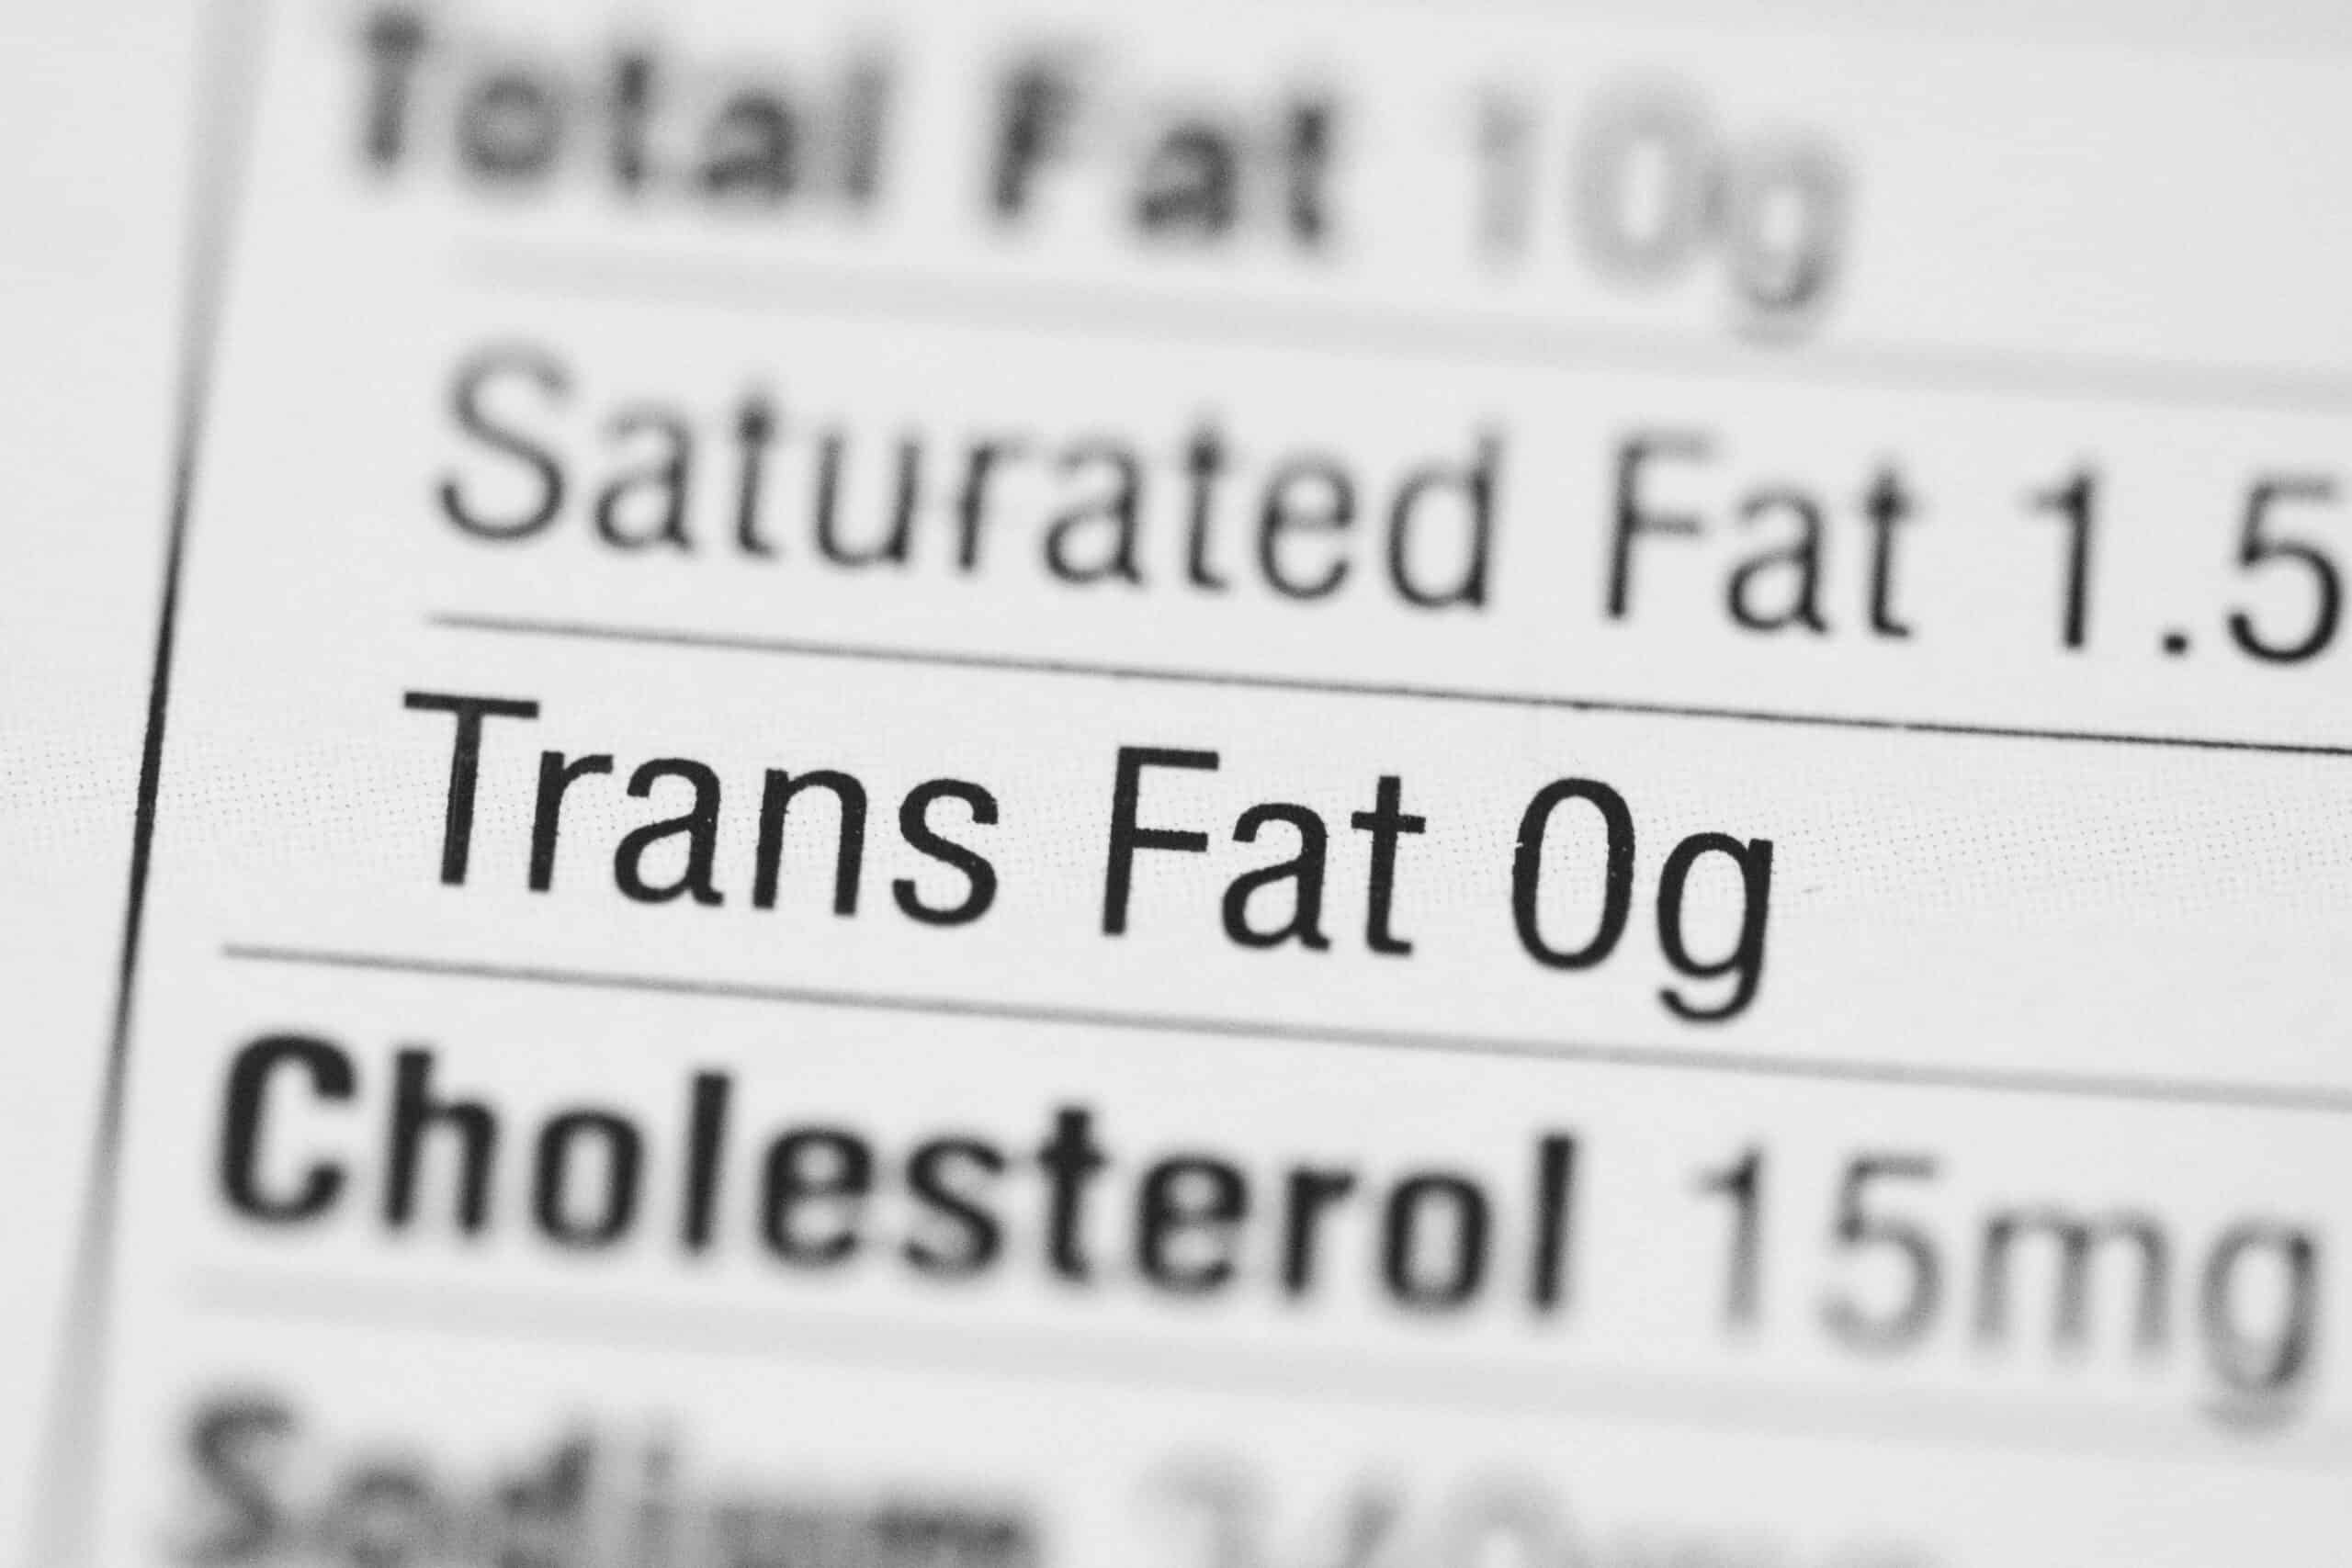 trans-fat-0g